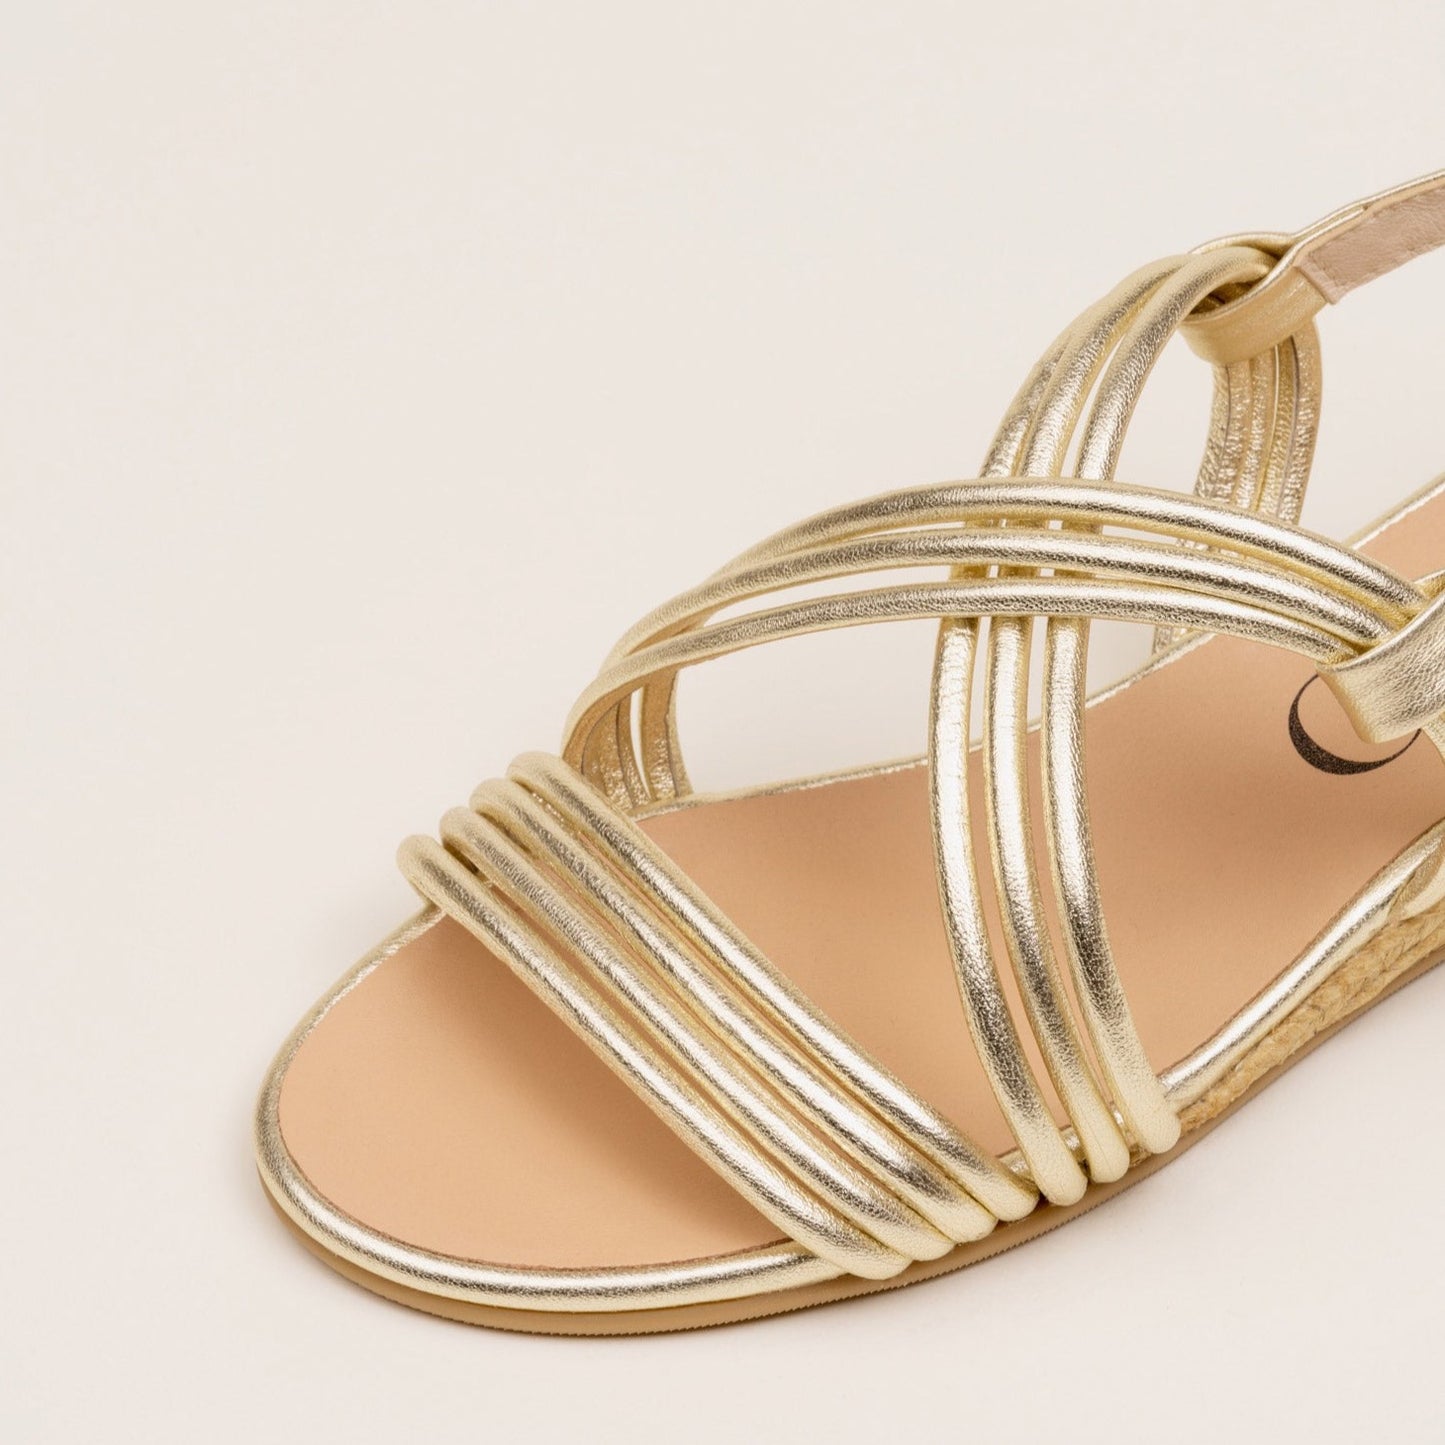 Gold leather flat sandal espadrilles